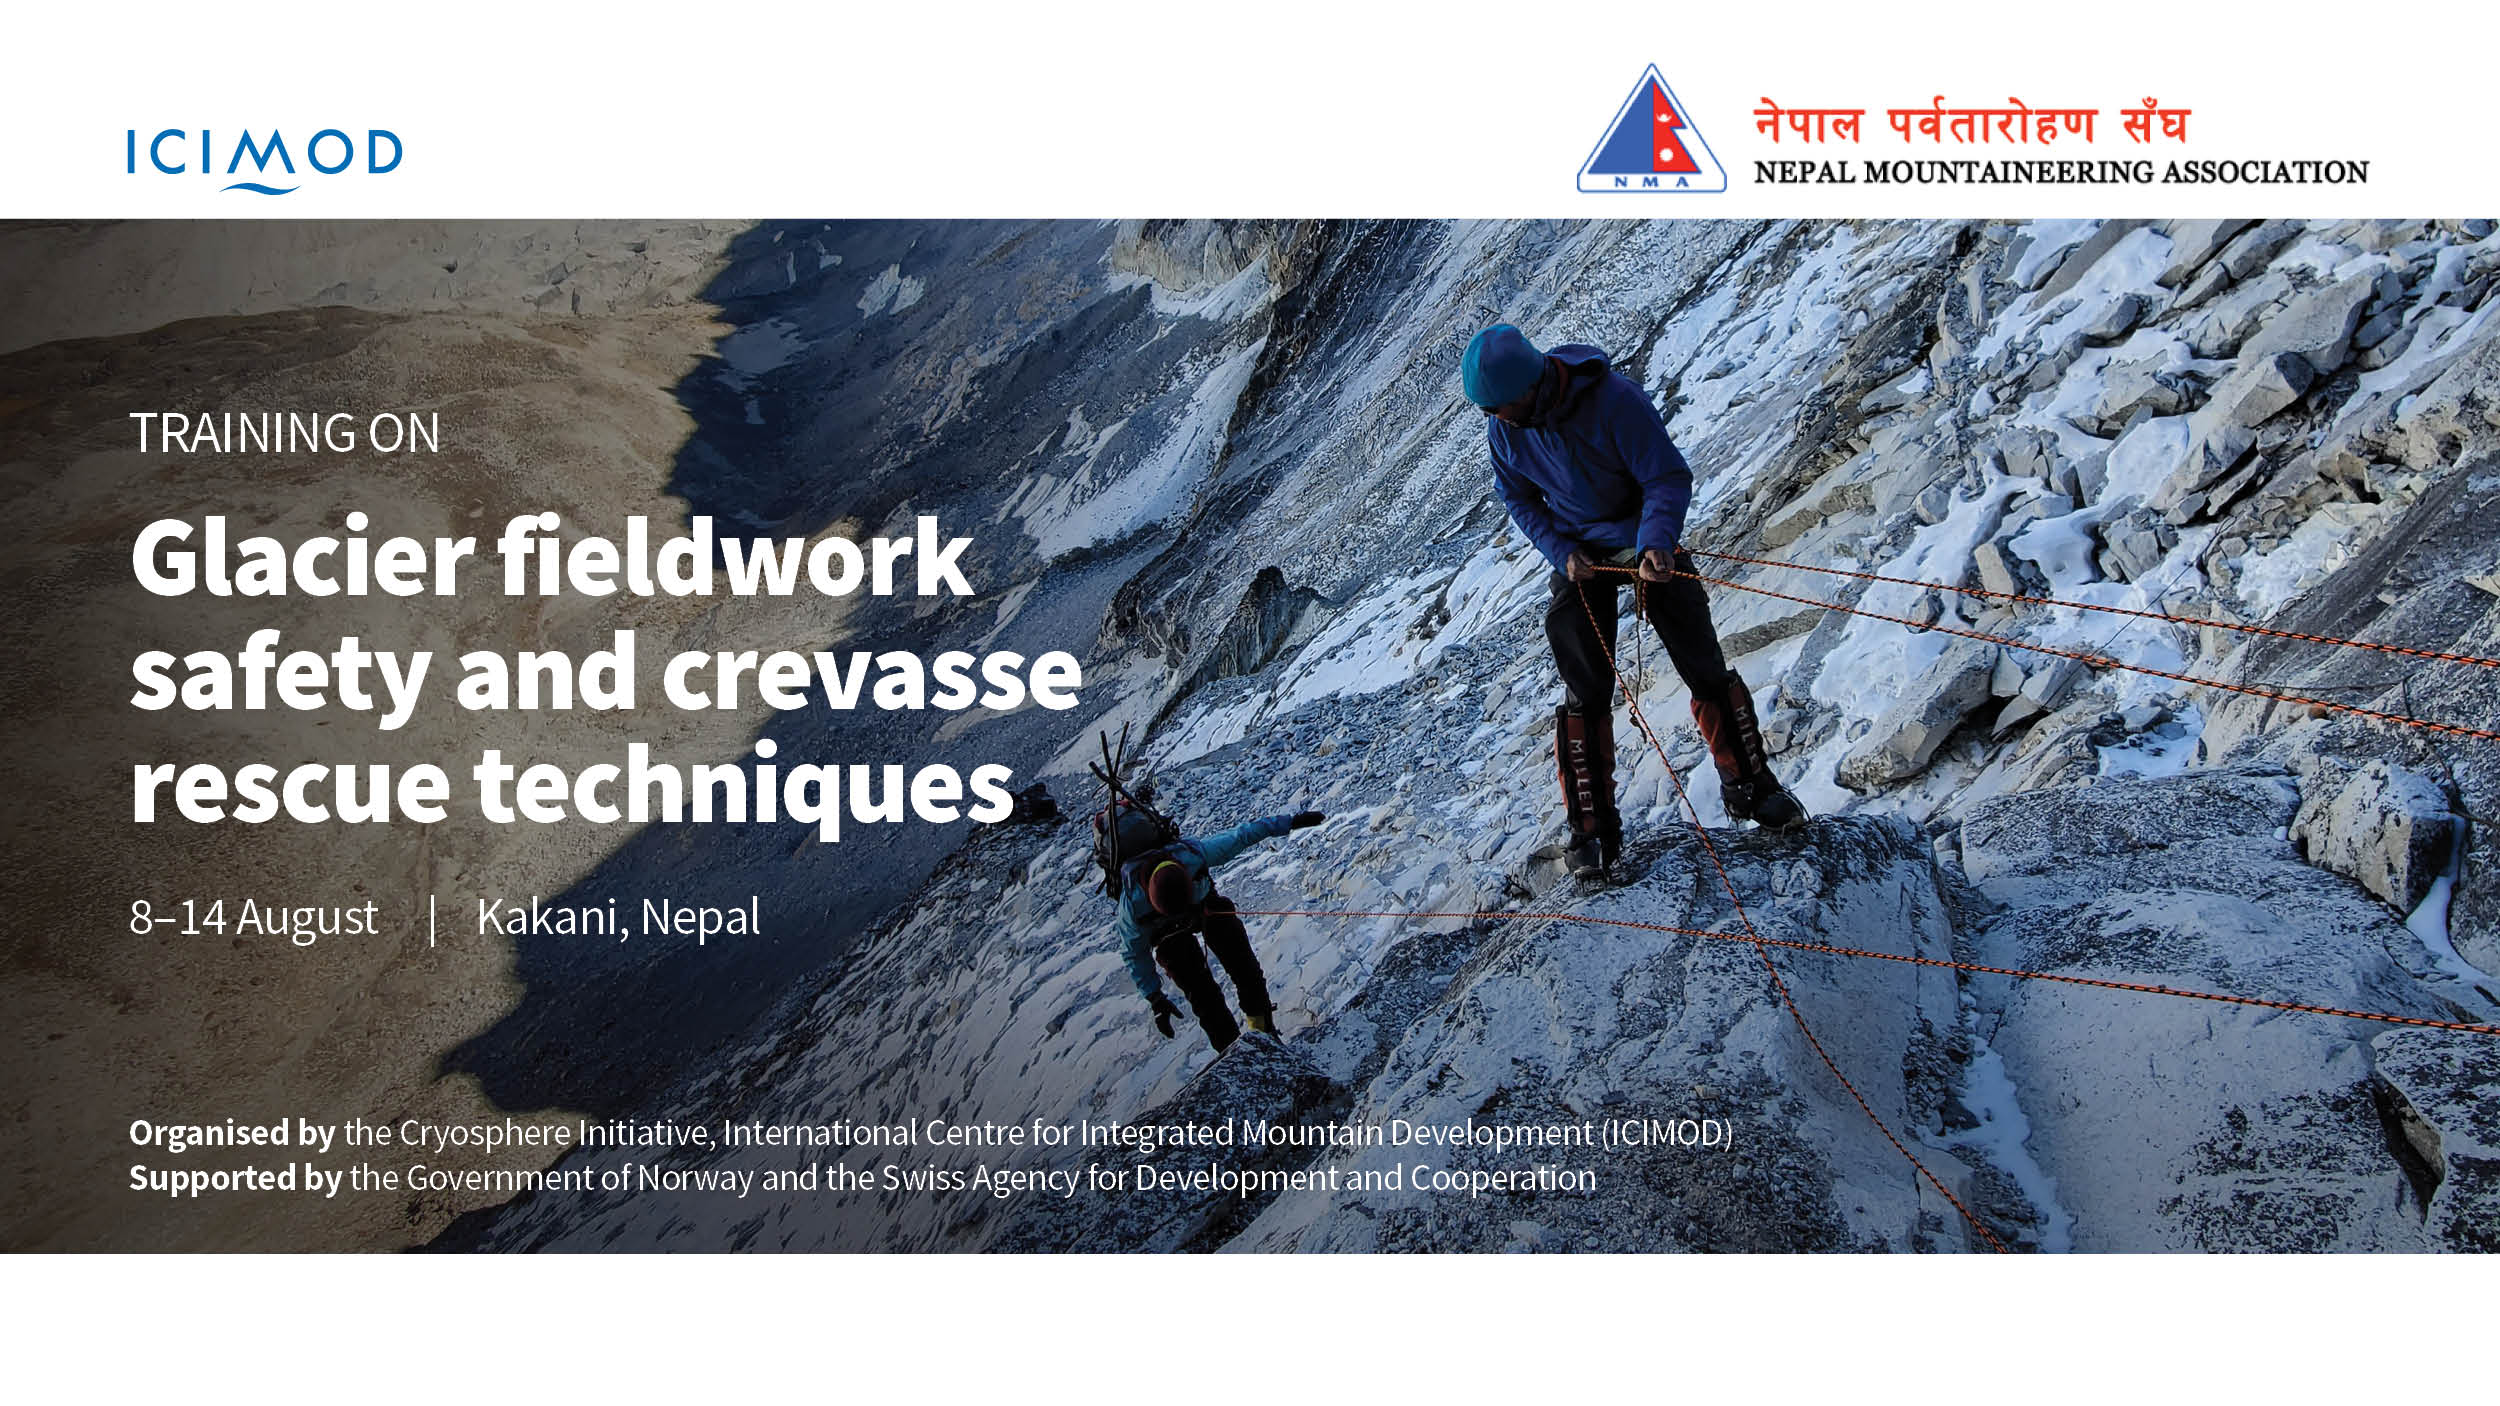 Glacier fieldwork safety and crevasse rescue techniques